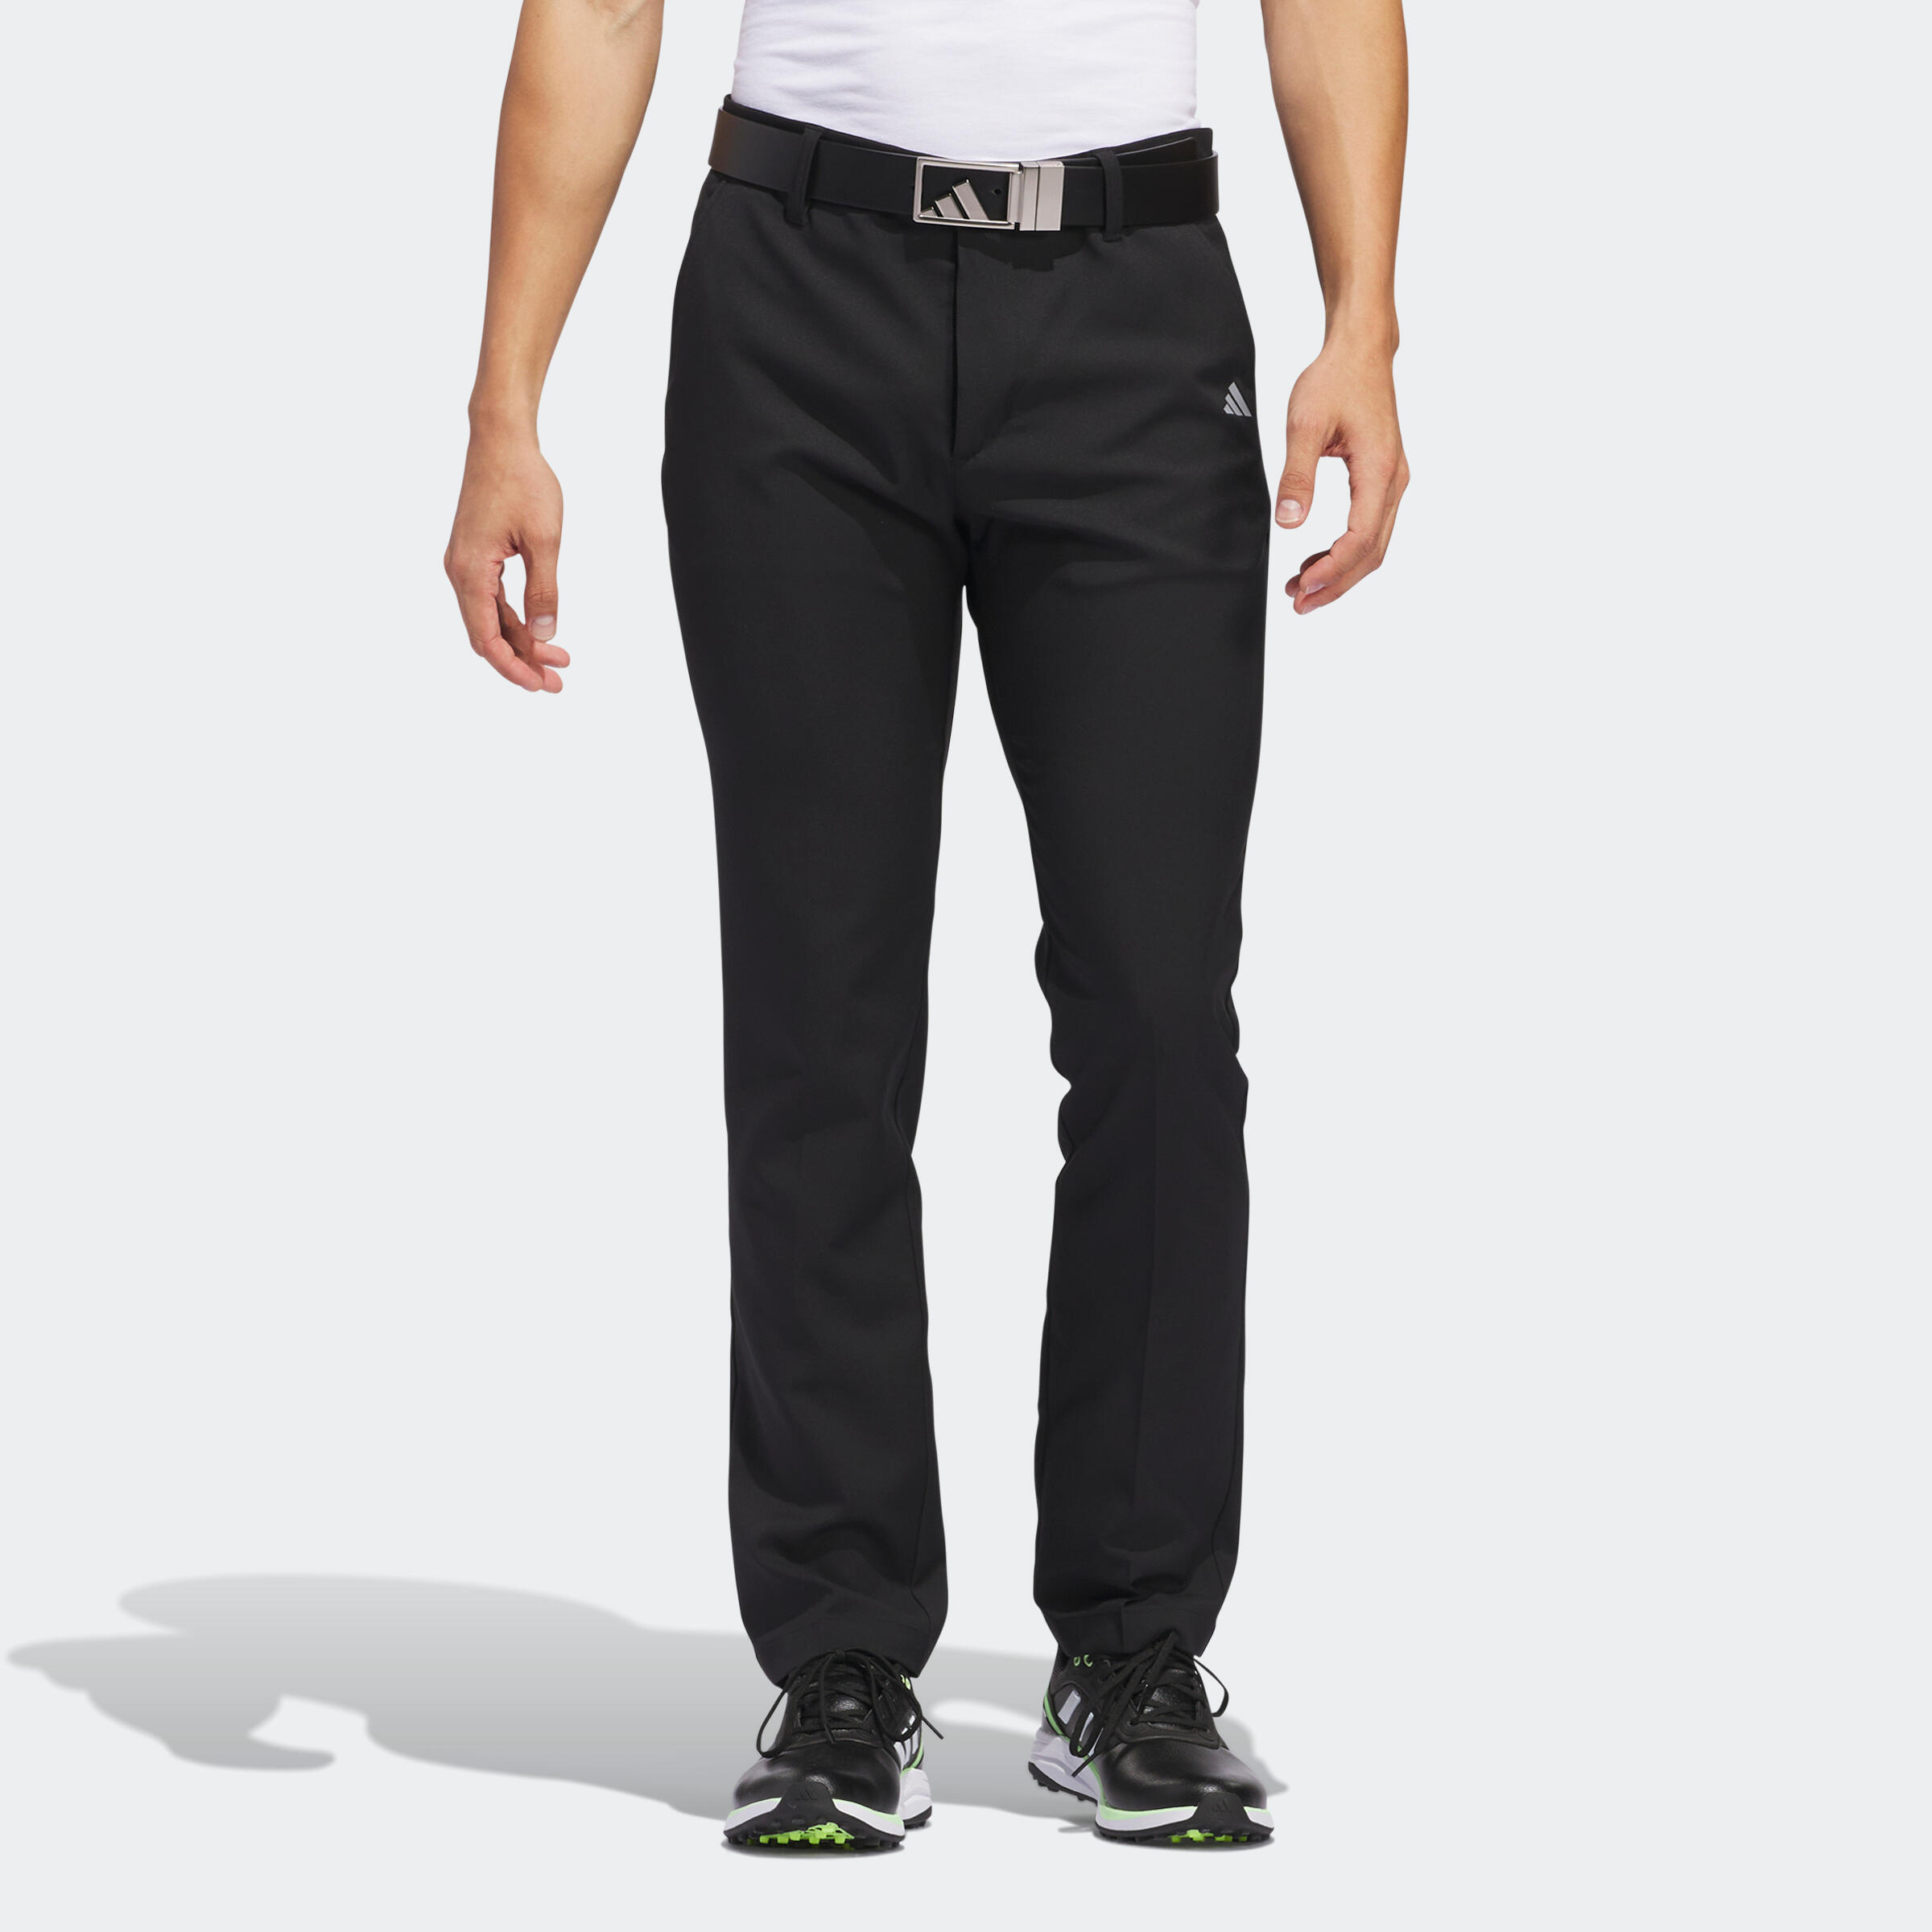 ADIDAS Men's golf trousers - Adidas black